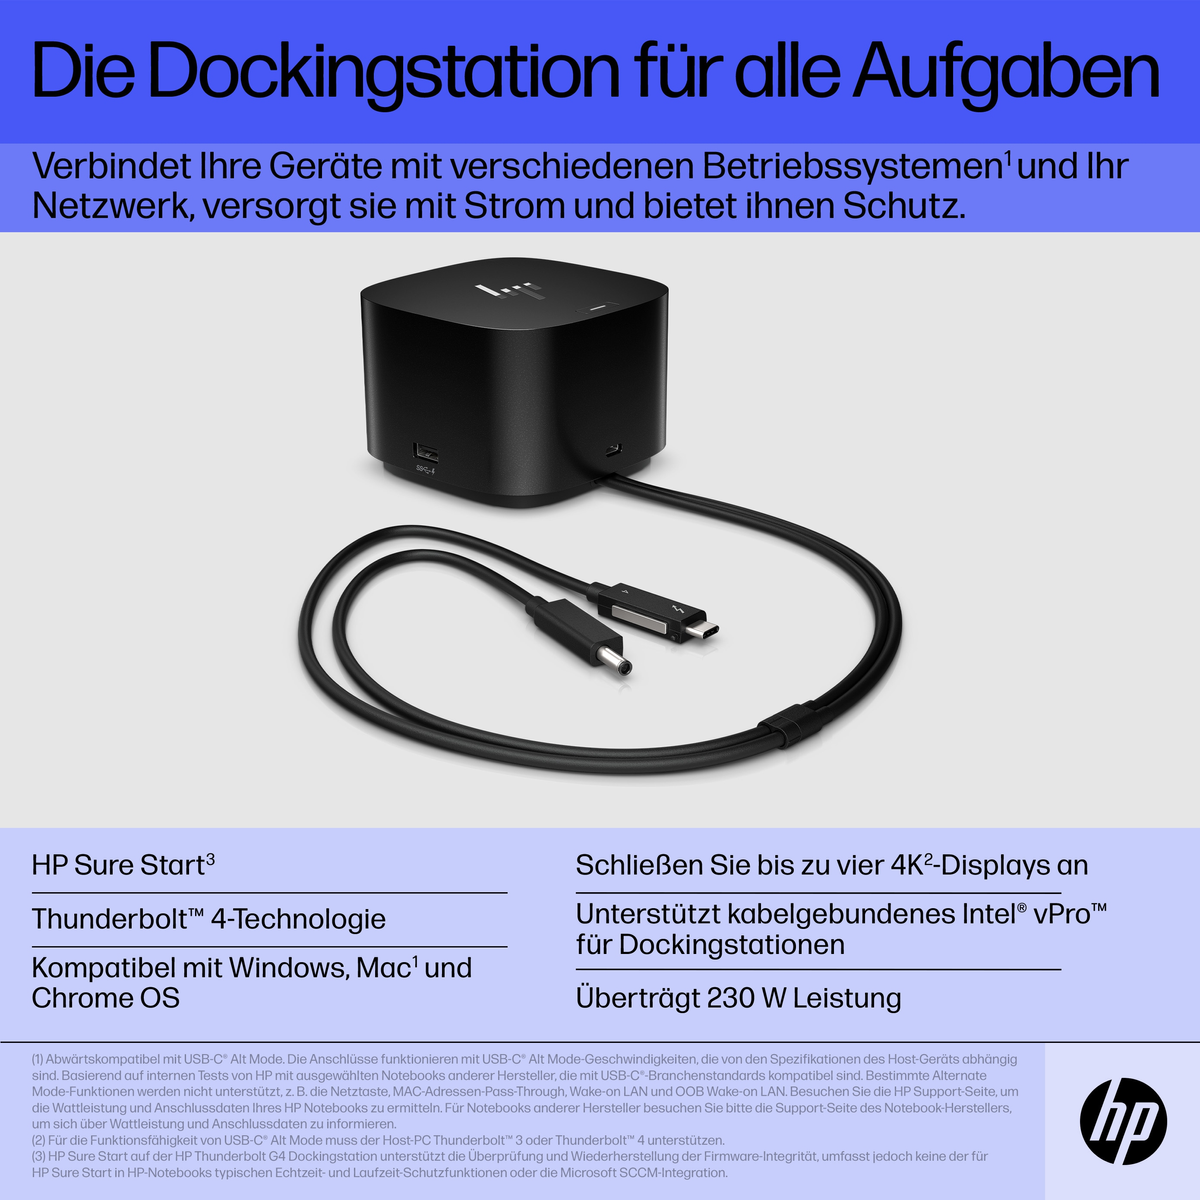 Combo with HP HP Dock Notebook 280W G4 Thunderbolt und Workstation Dockingstation, Cable für mobile Schwarz